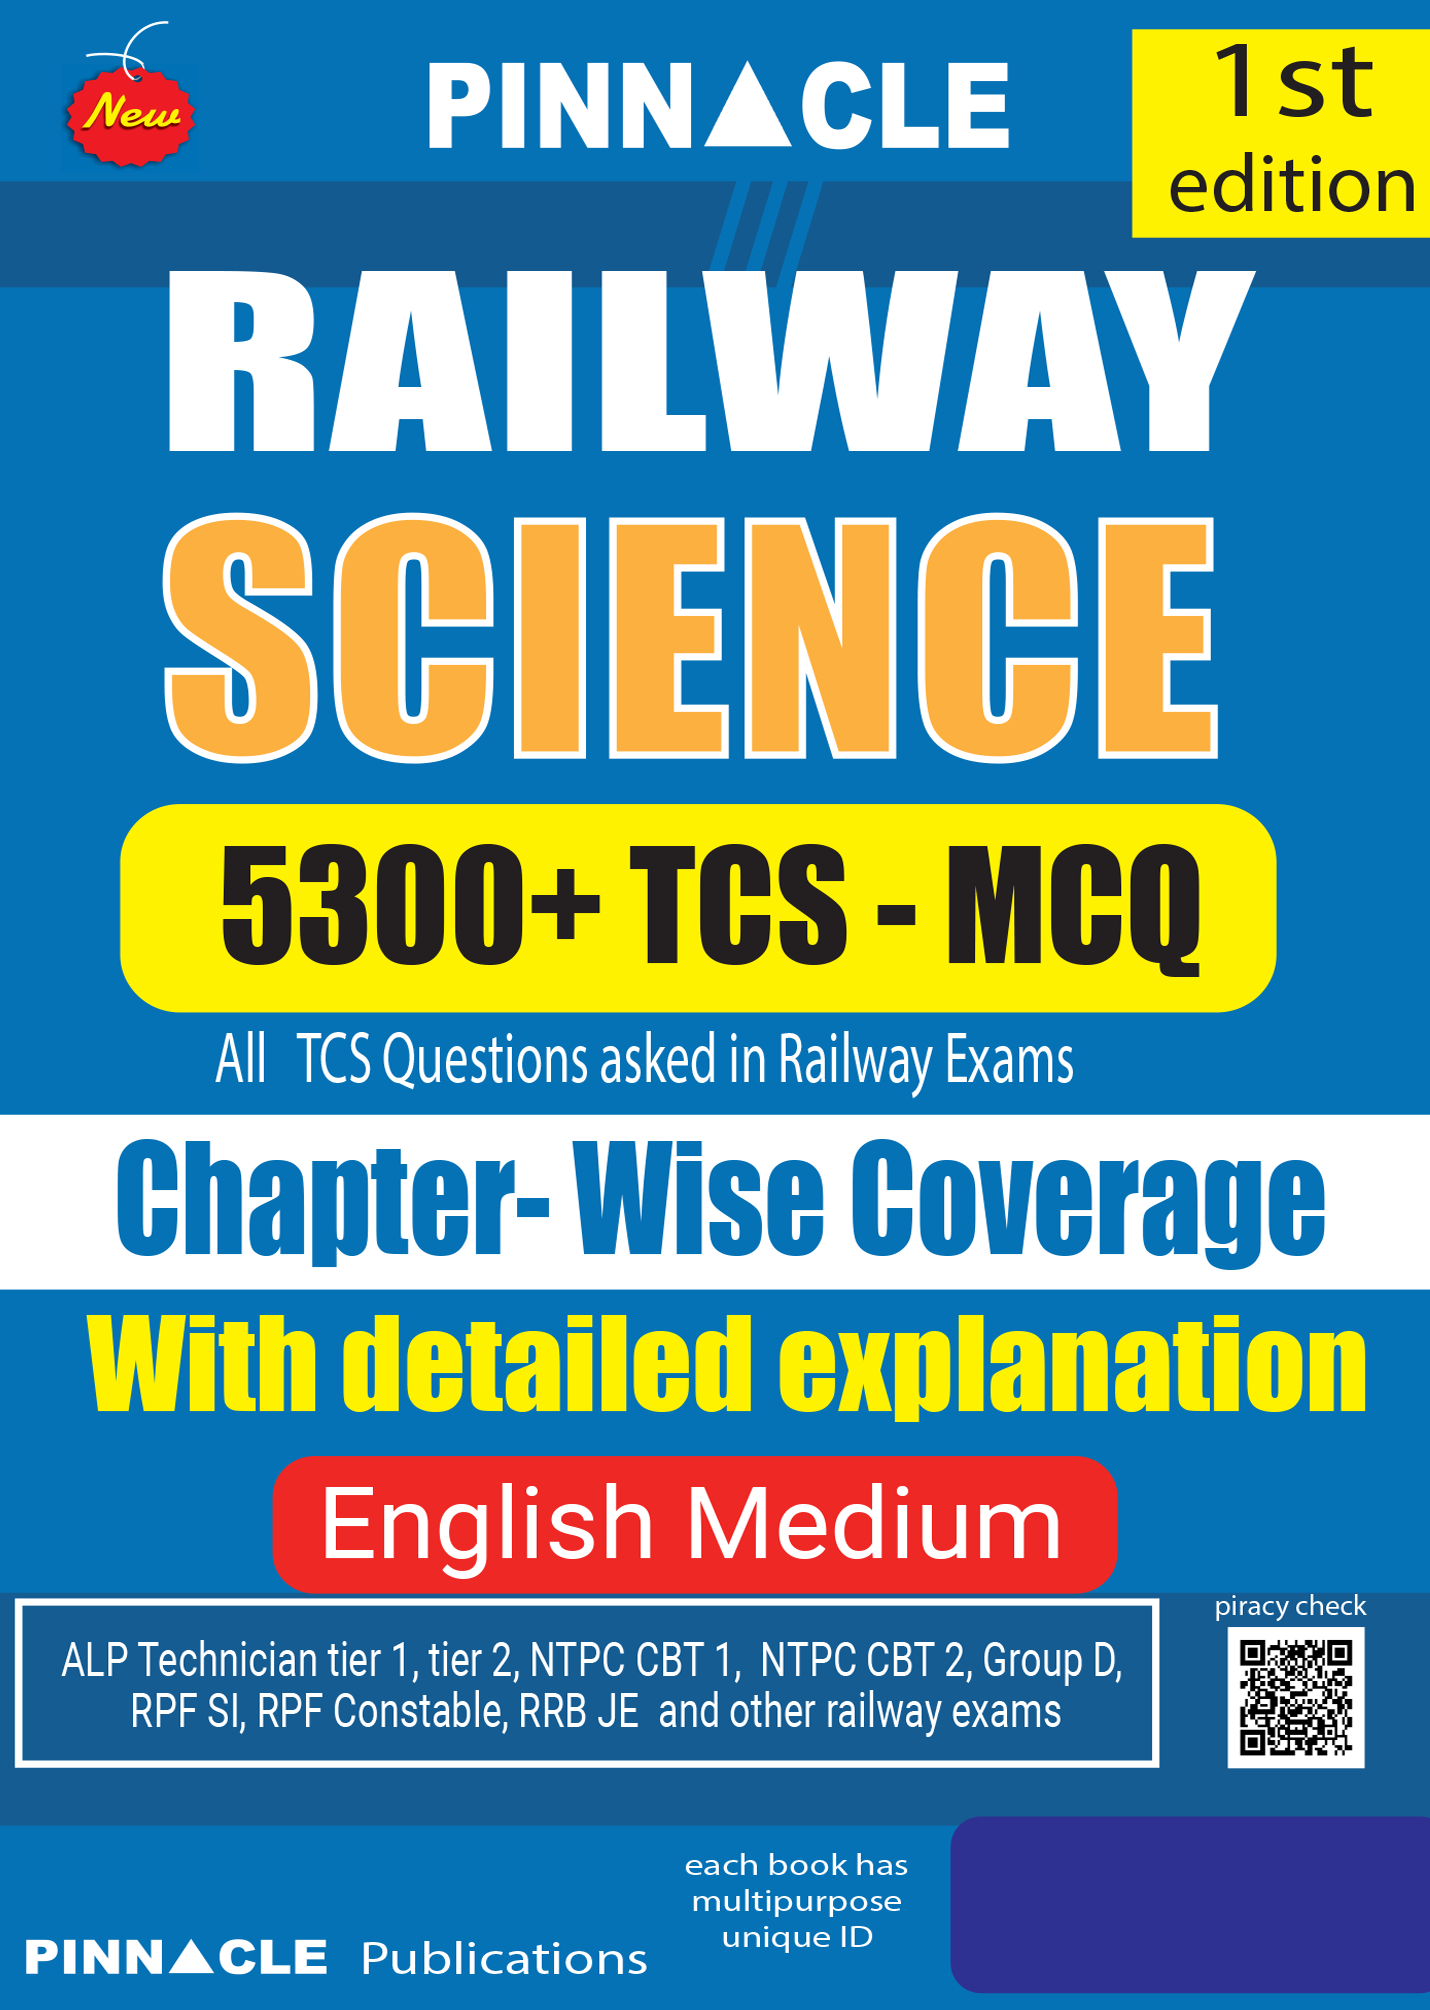 Pinnacle Railway Science English book